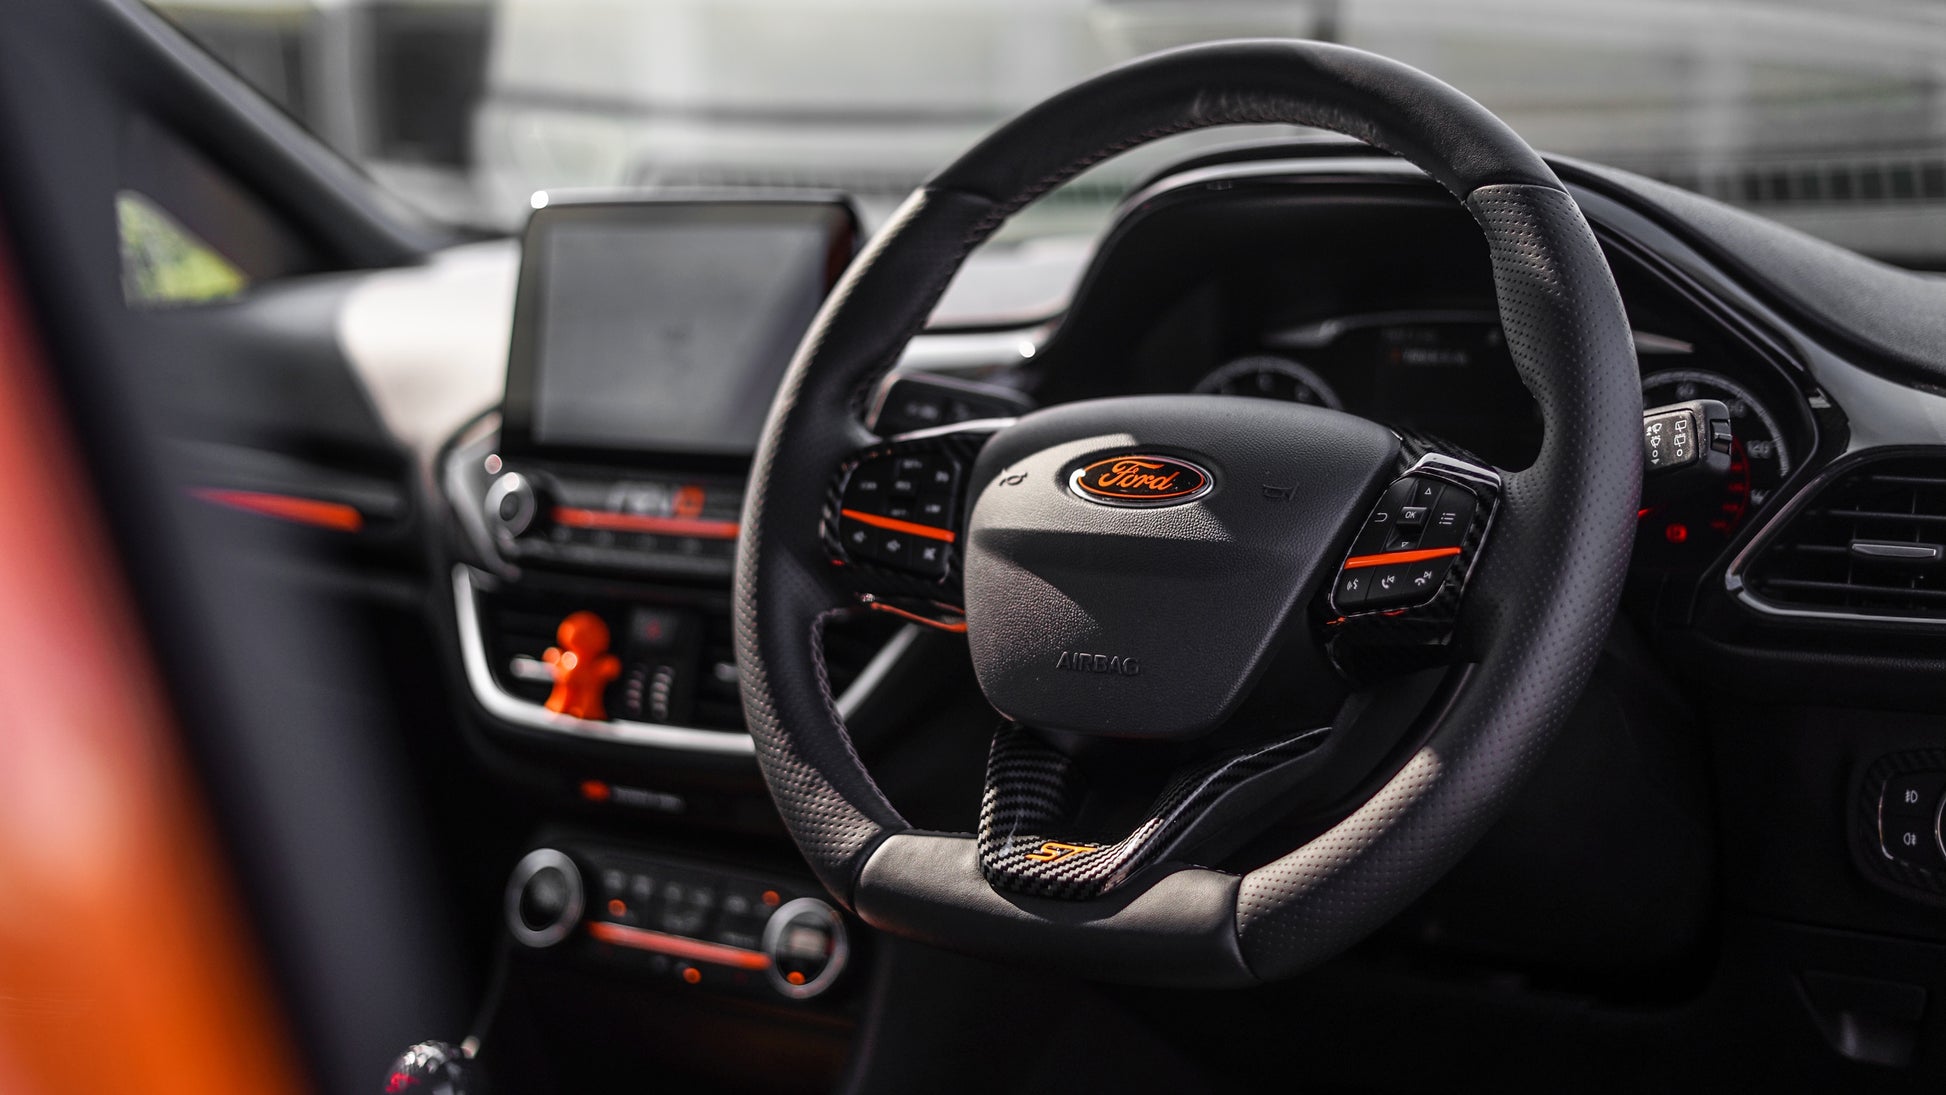 For 2022 2023 Orange Steering Wheel Panel Cover Car Interior Frame Sticker  Decorative Sequins